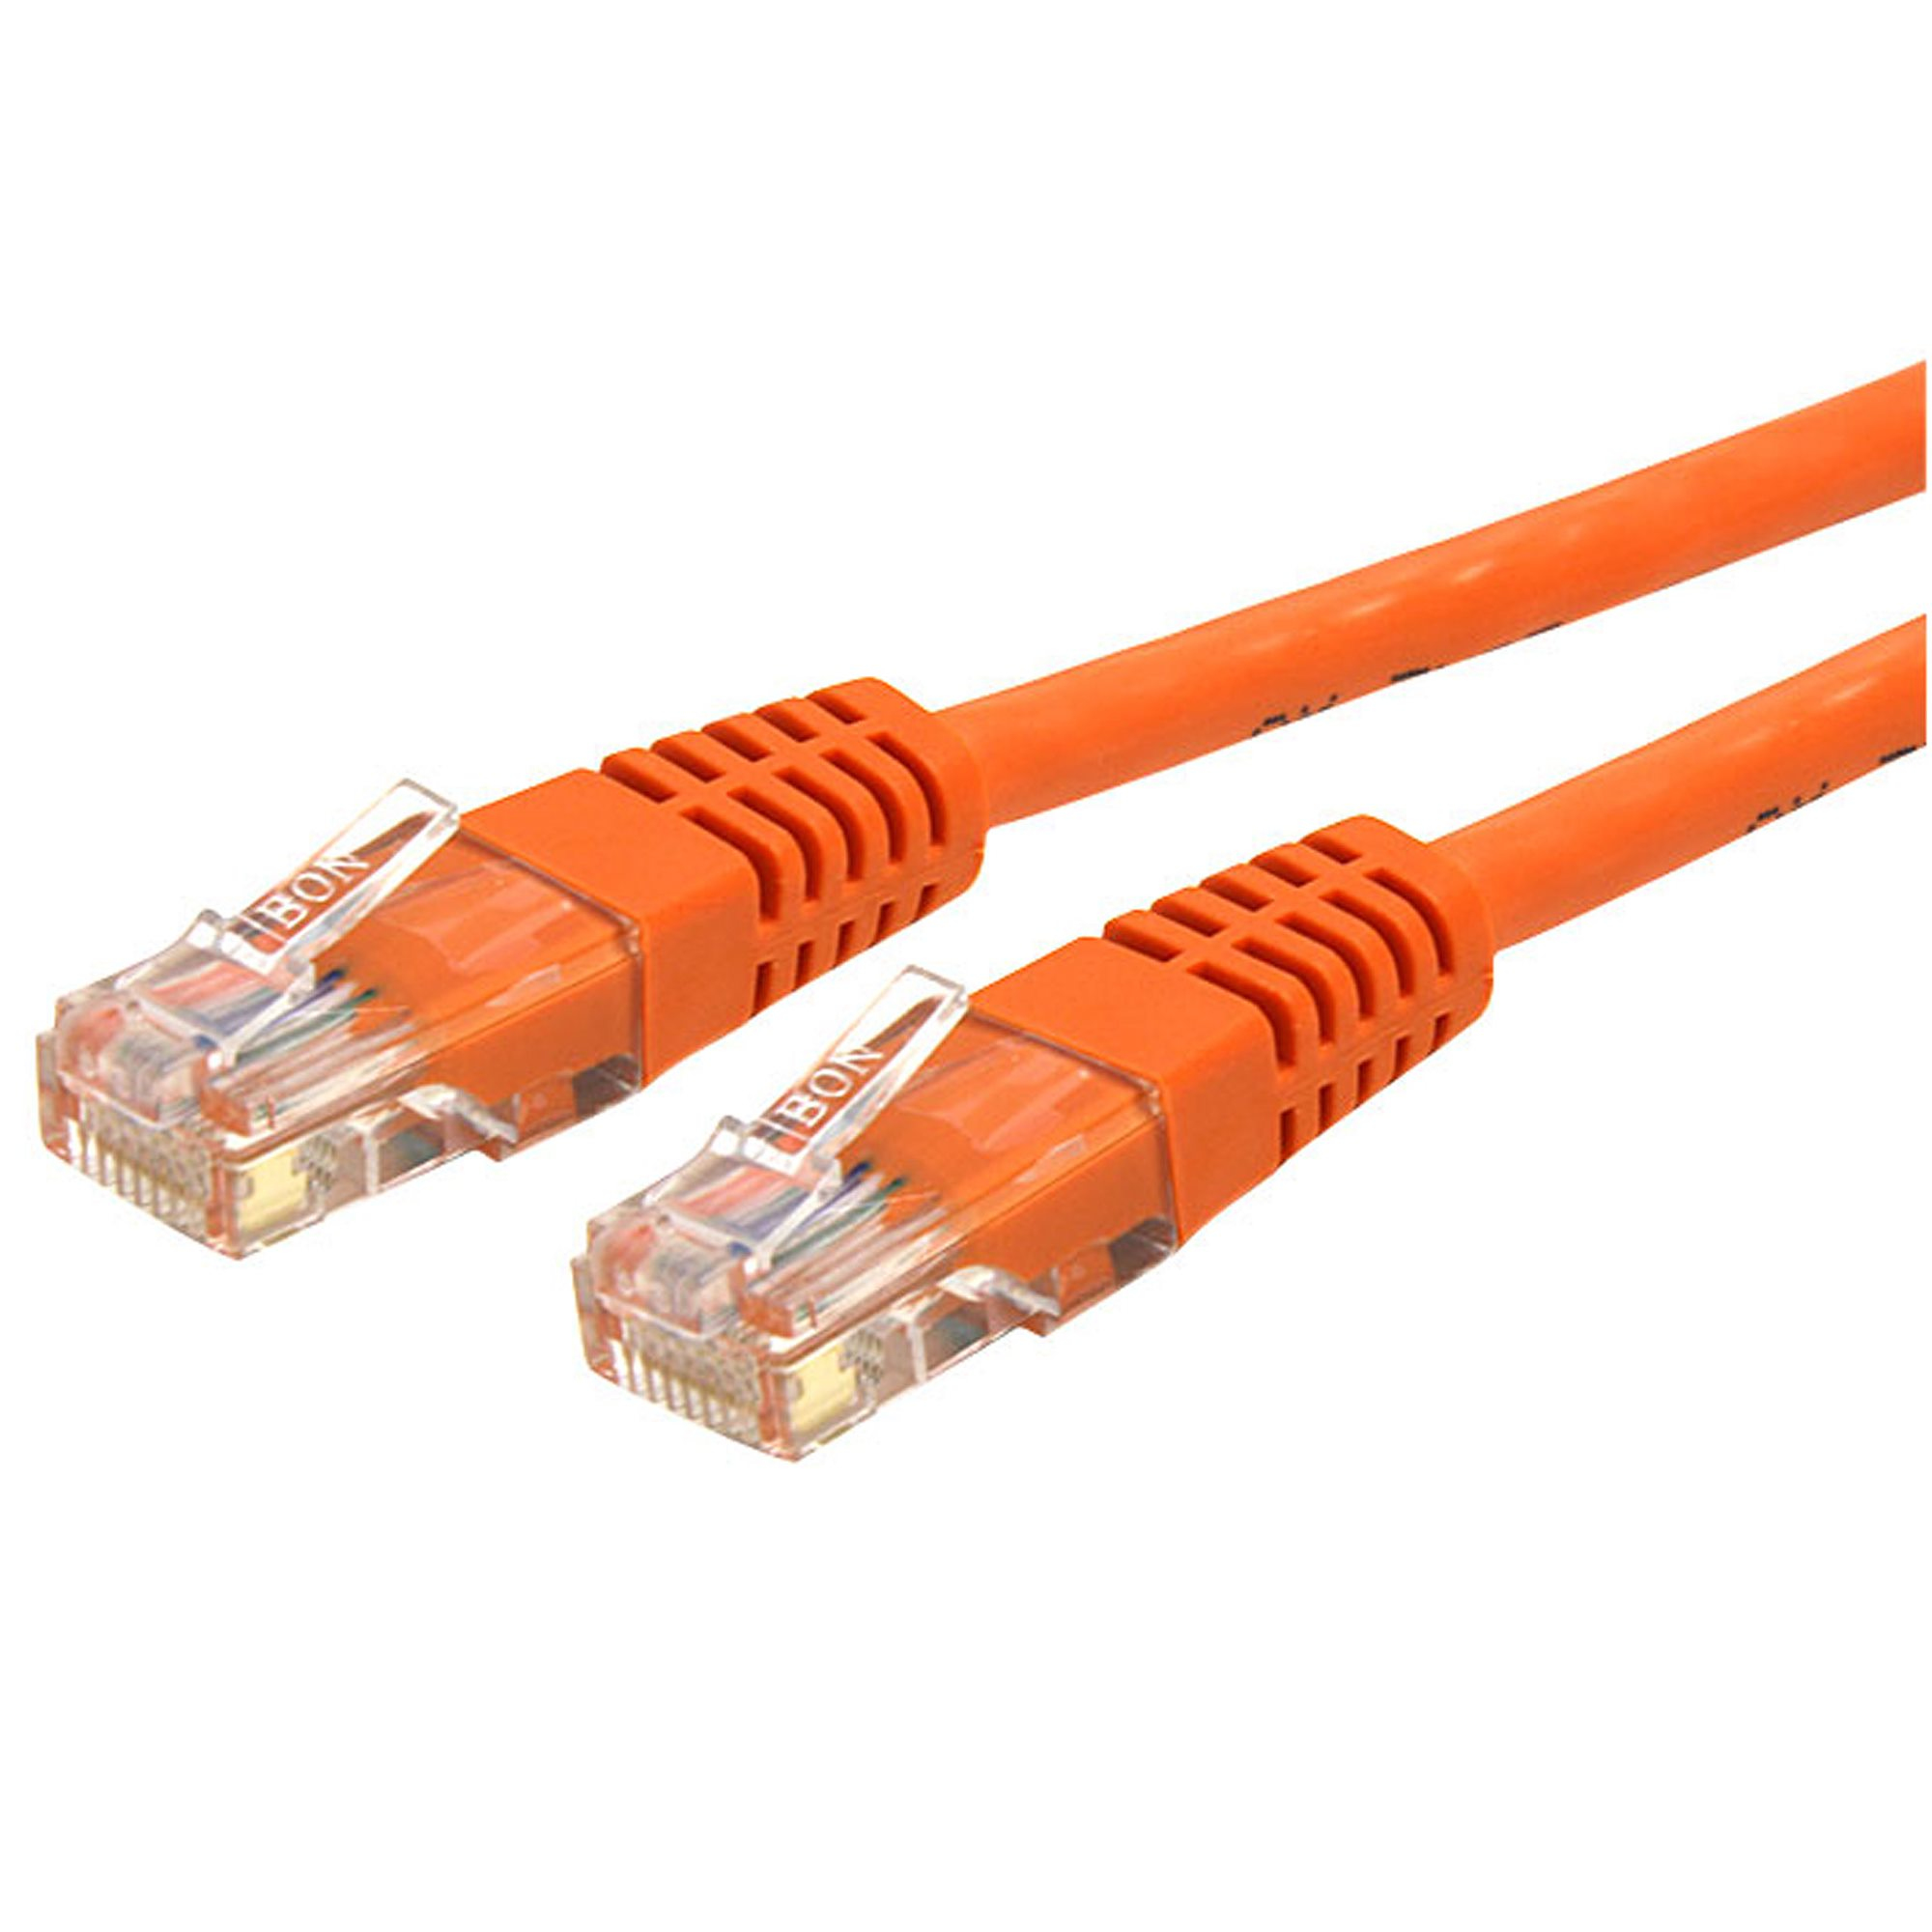 Cable 7.6M Gigabit  Red  Cat6 Utp Rj45  Naranja  Startech C6Patch25Or